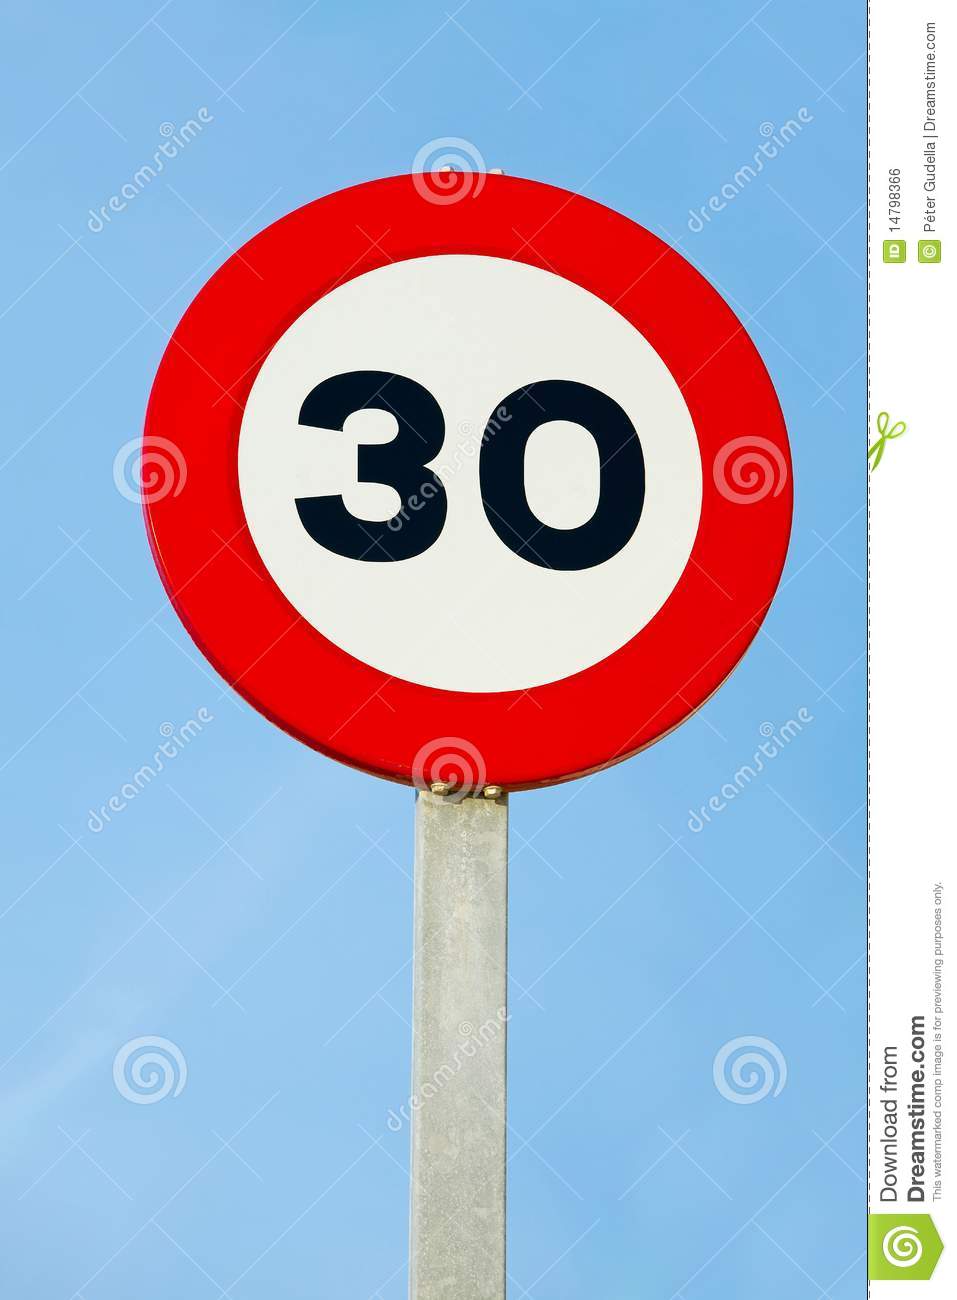 Speed Limit Royalty Free Stock Image   Image  14798366